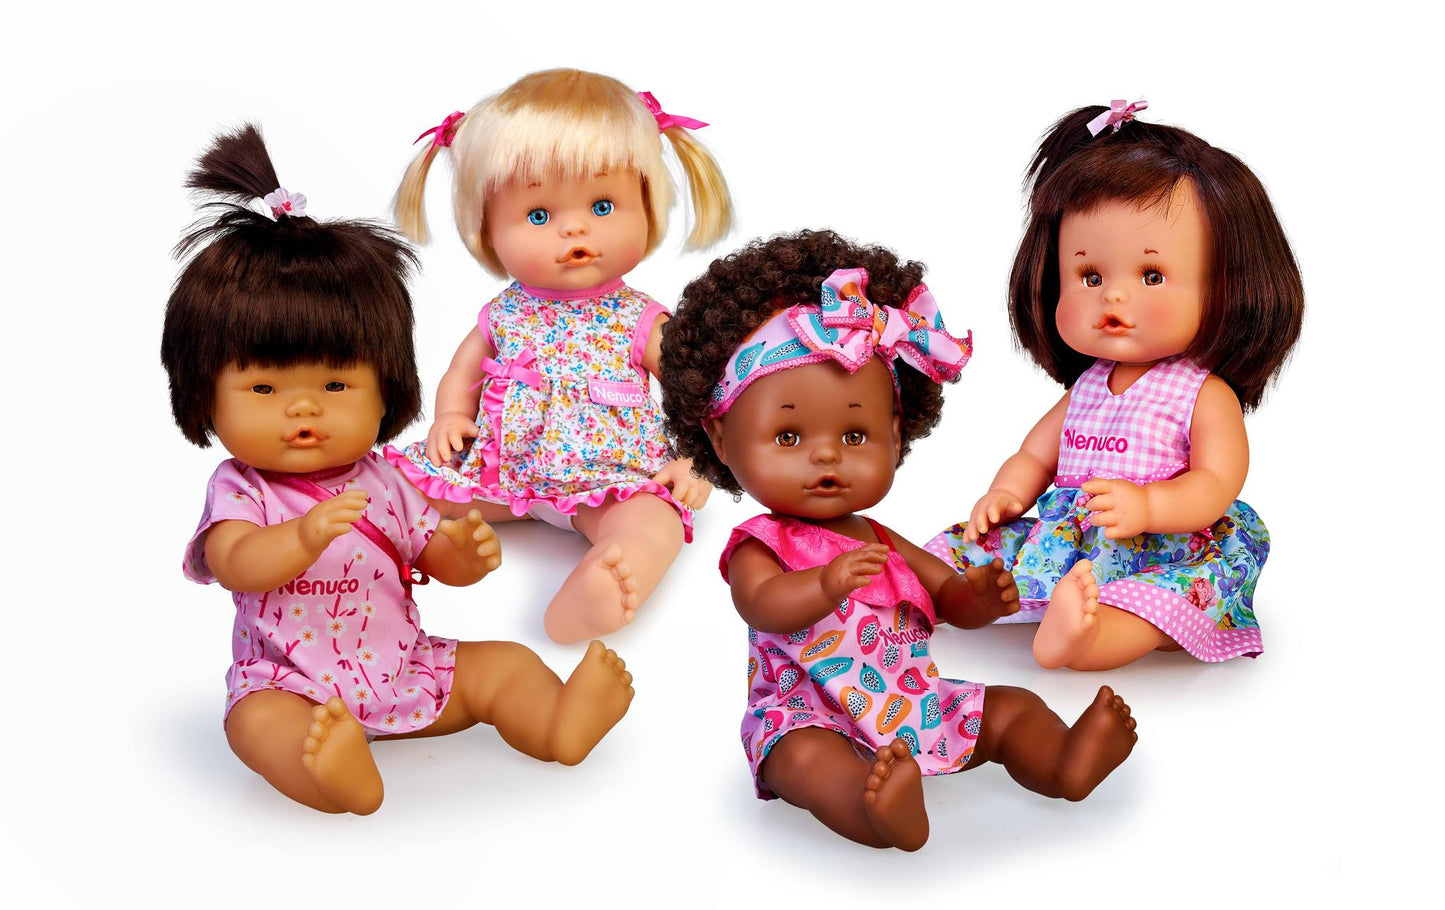 Nenucos of the World Caucasian Baby Doll - Light Skin Tone with Blue Eyes, 12" Doll